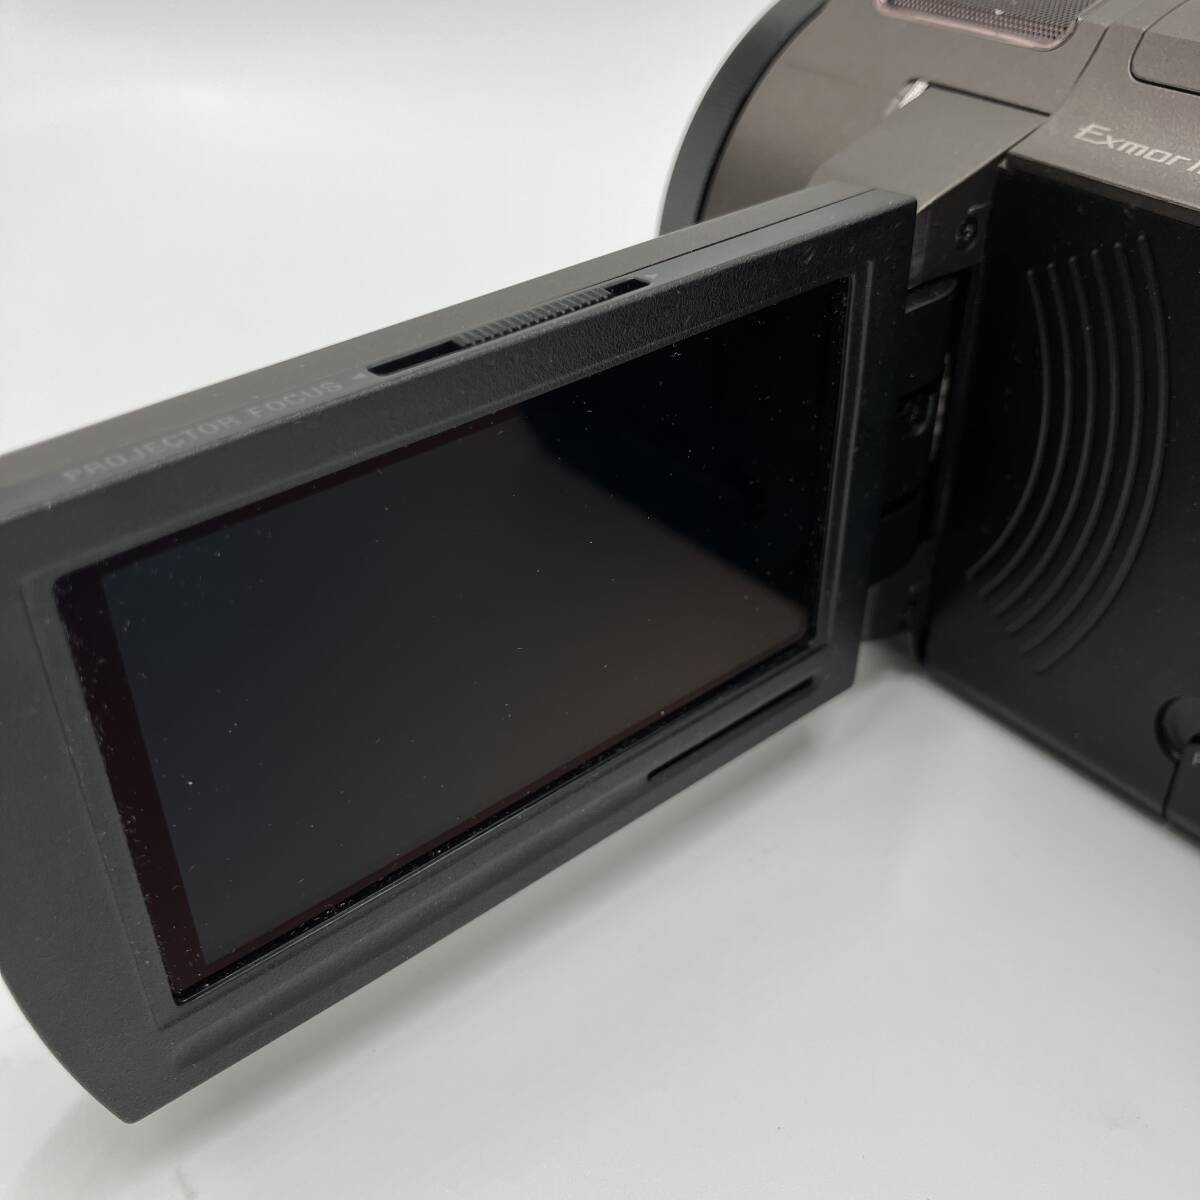 SONY 4Kビデオカメラ Handycam FDR-AXP35 ブロンズブラウン 光学10倍 FDR-AXP35-TI